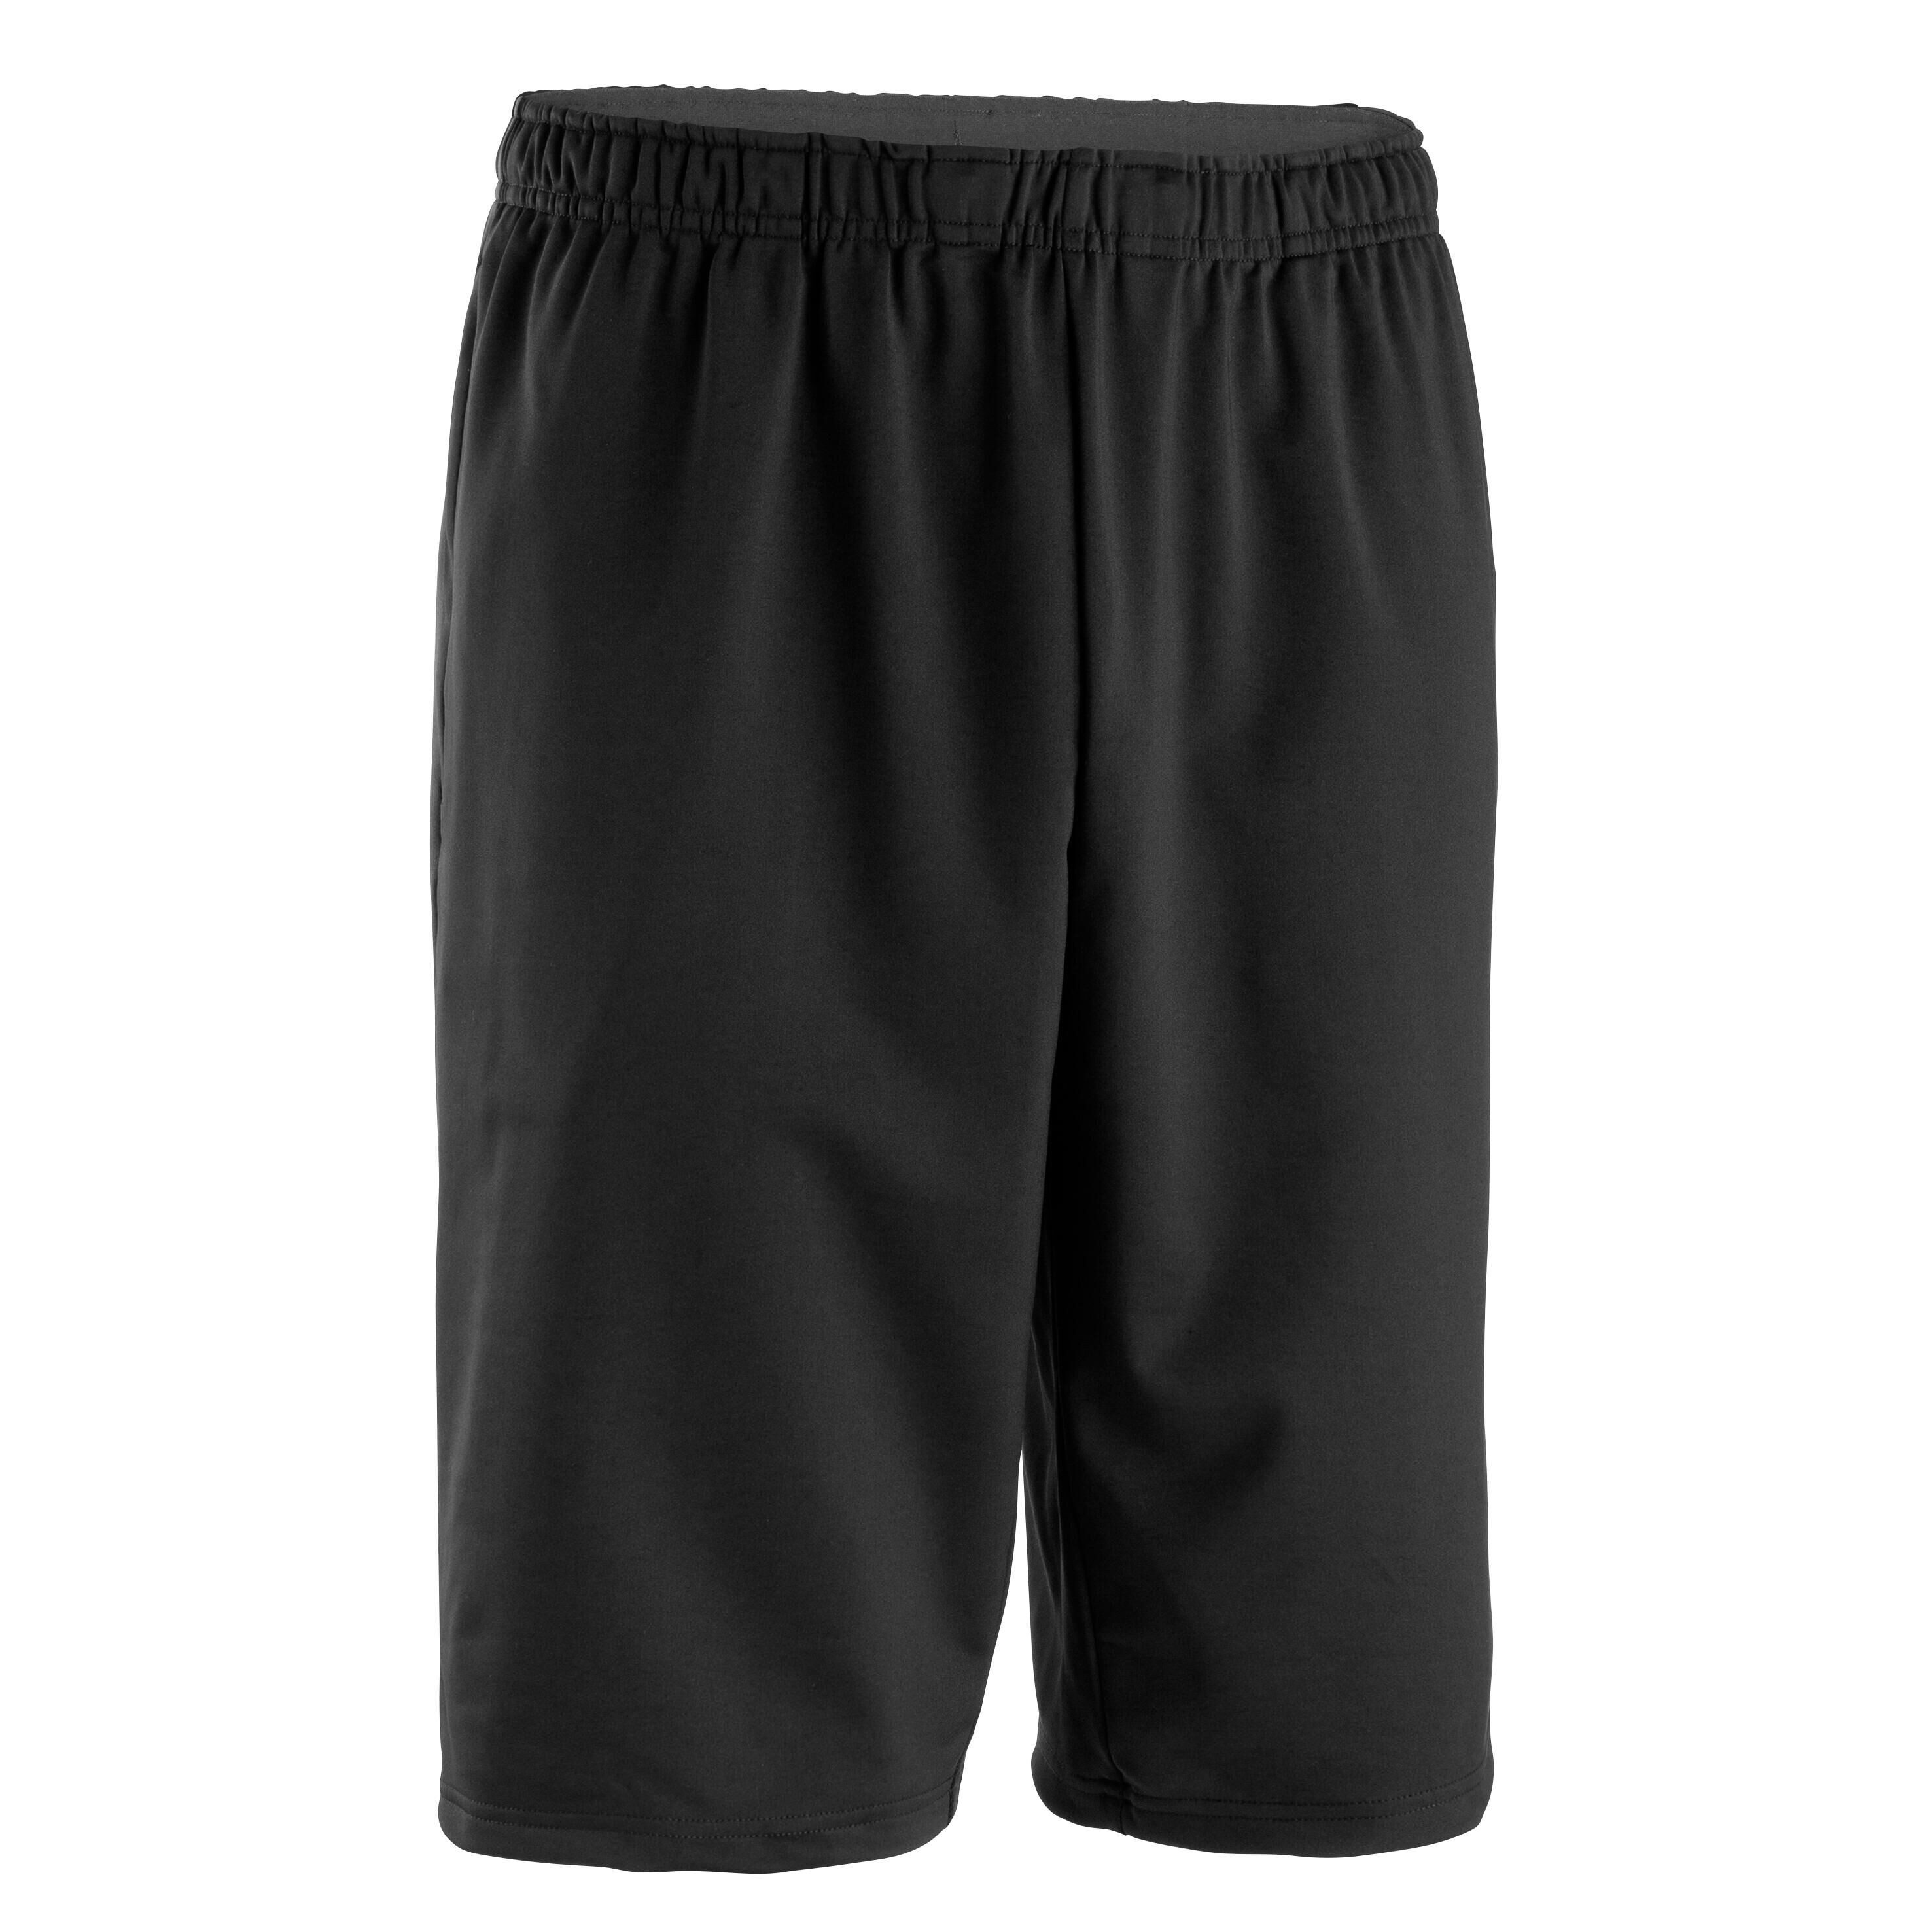 KIPSTA Adult Long Shorts Viralto Club - Black & Carbon Grey